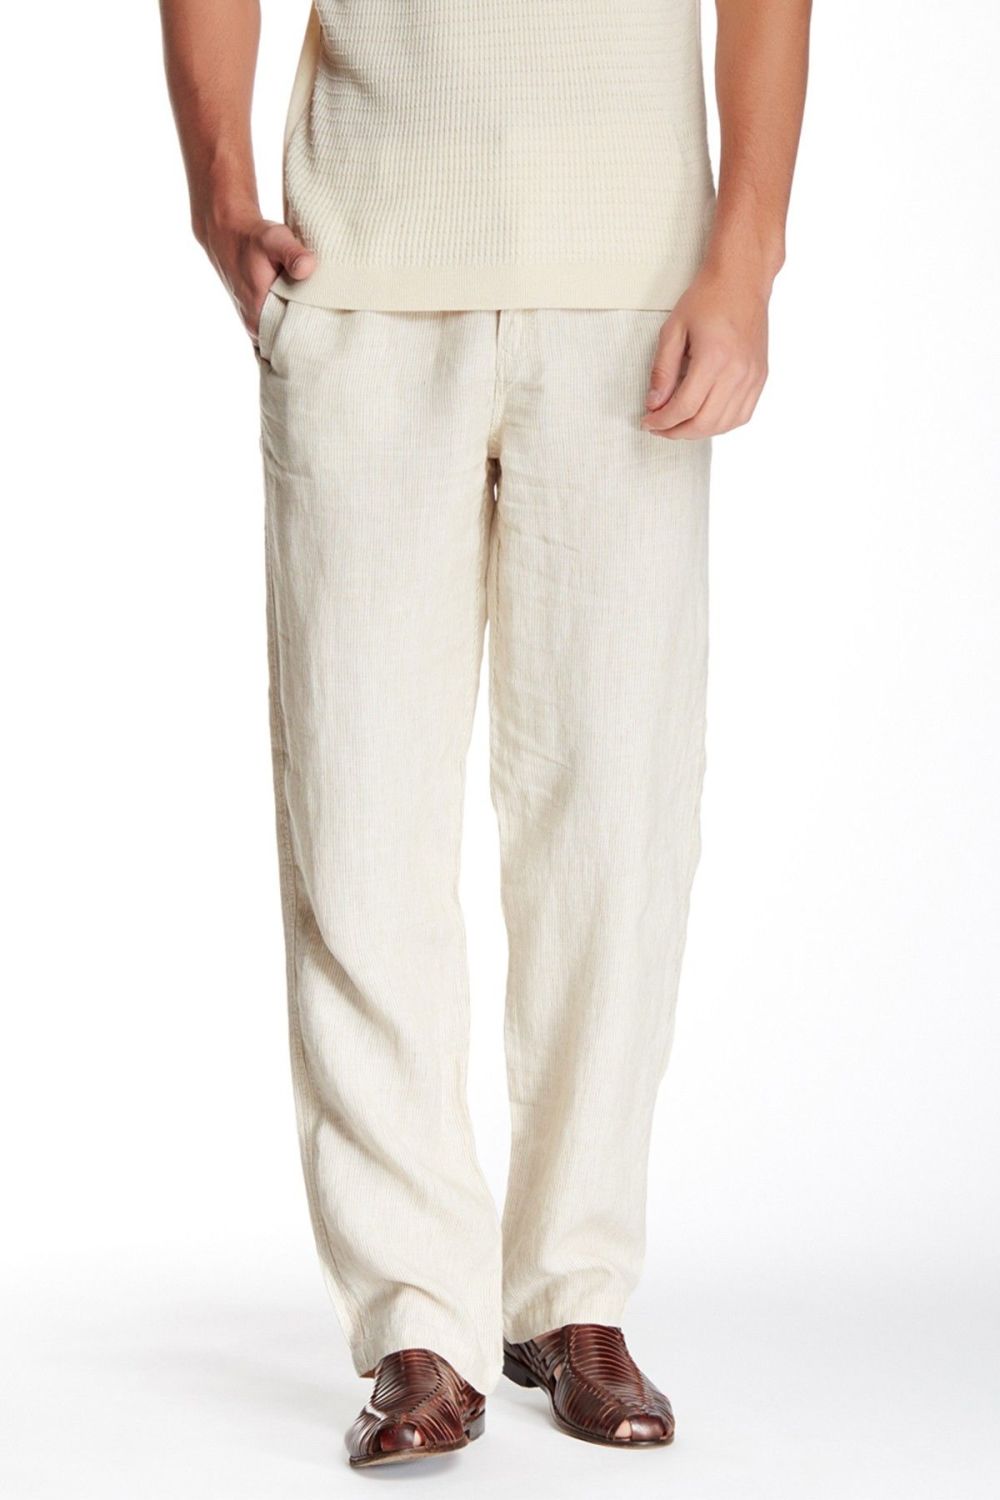 Tommy Bahama Linen Pant Size: 33X34 M